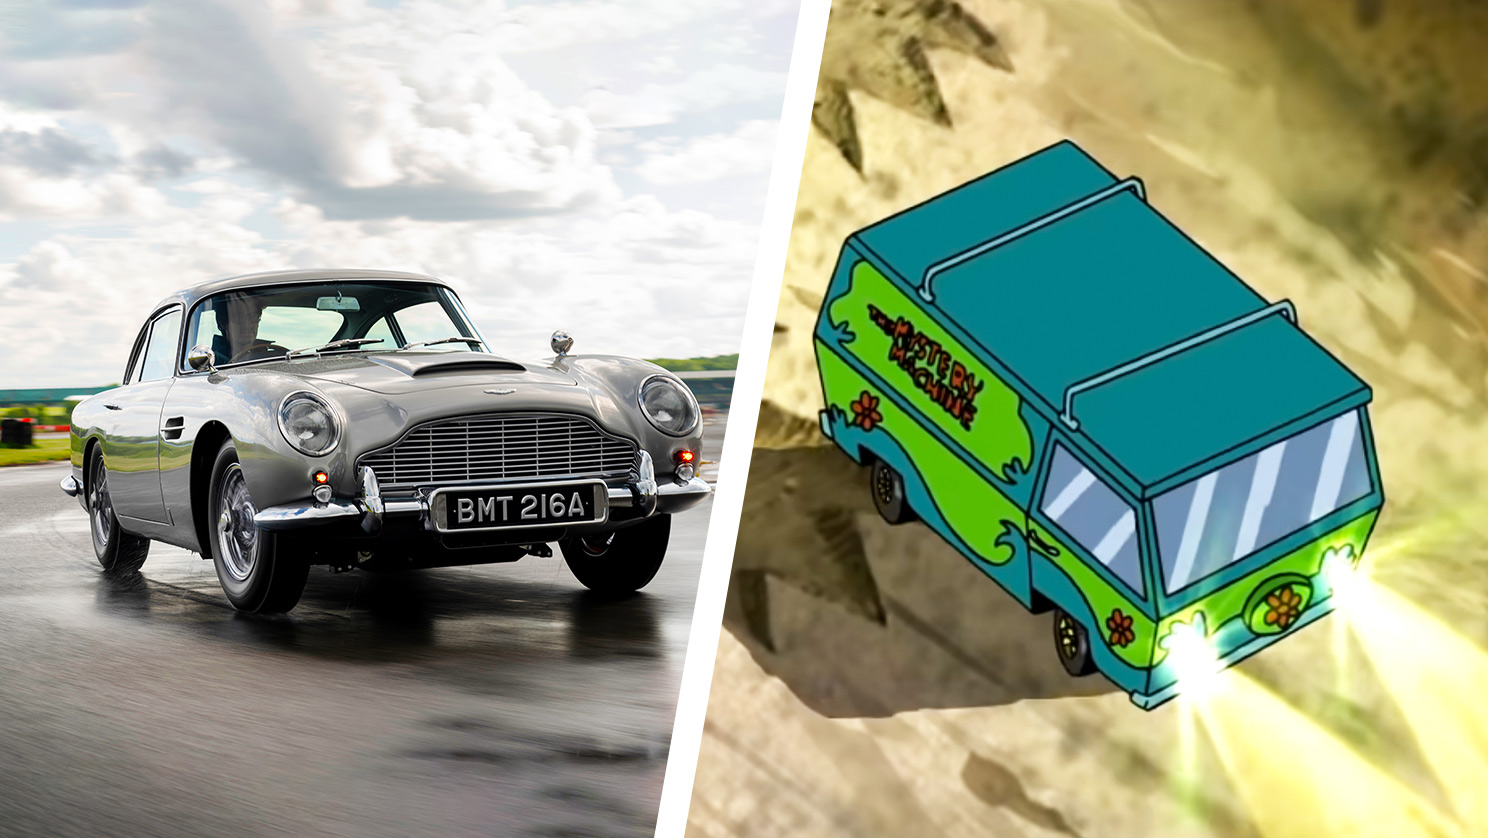 James Bond Aston Martin DB5 and the Scooby Doo Mystery Machine